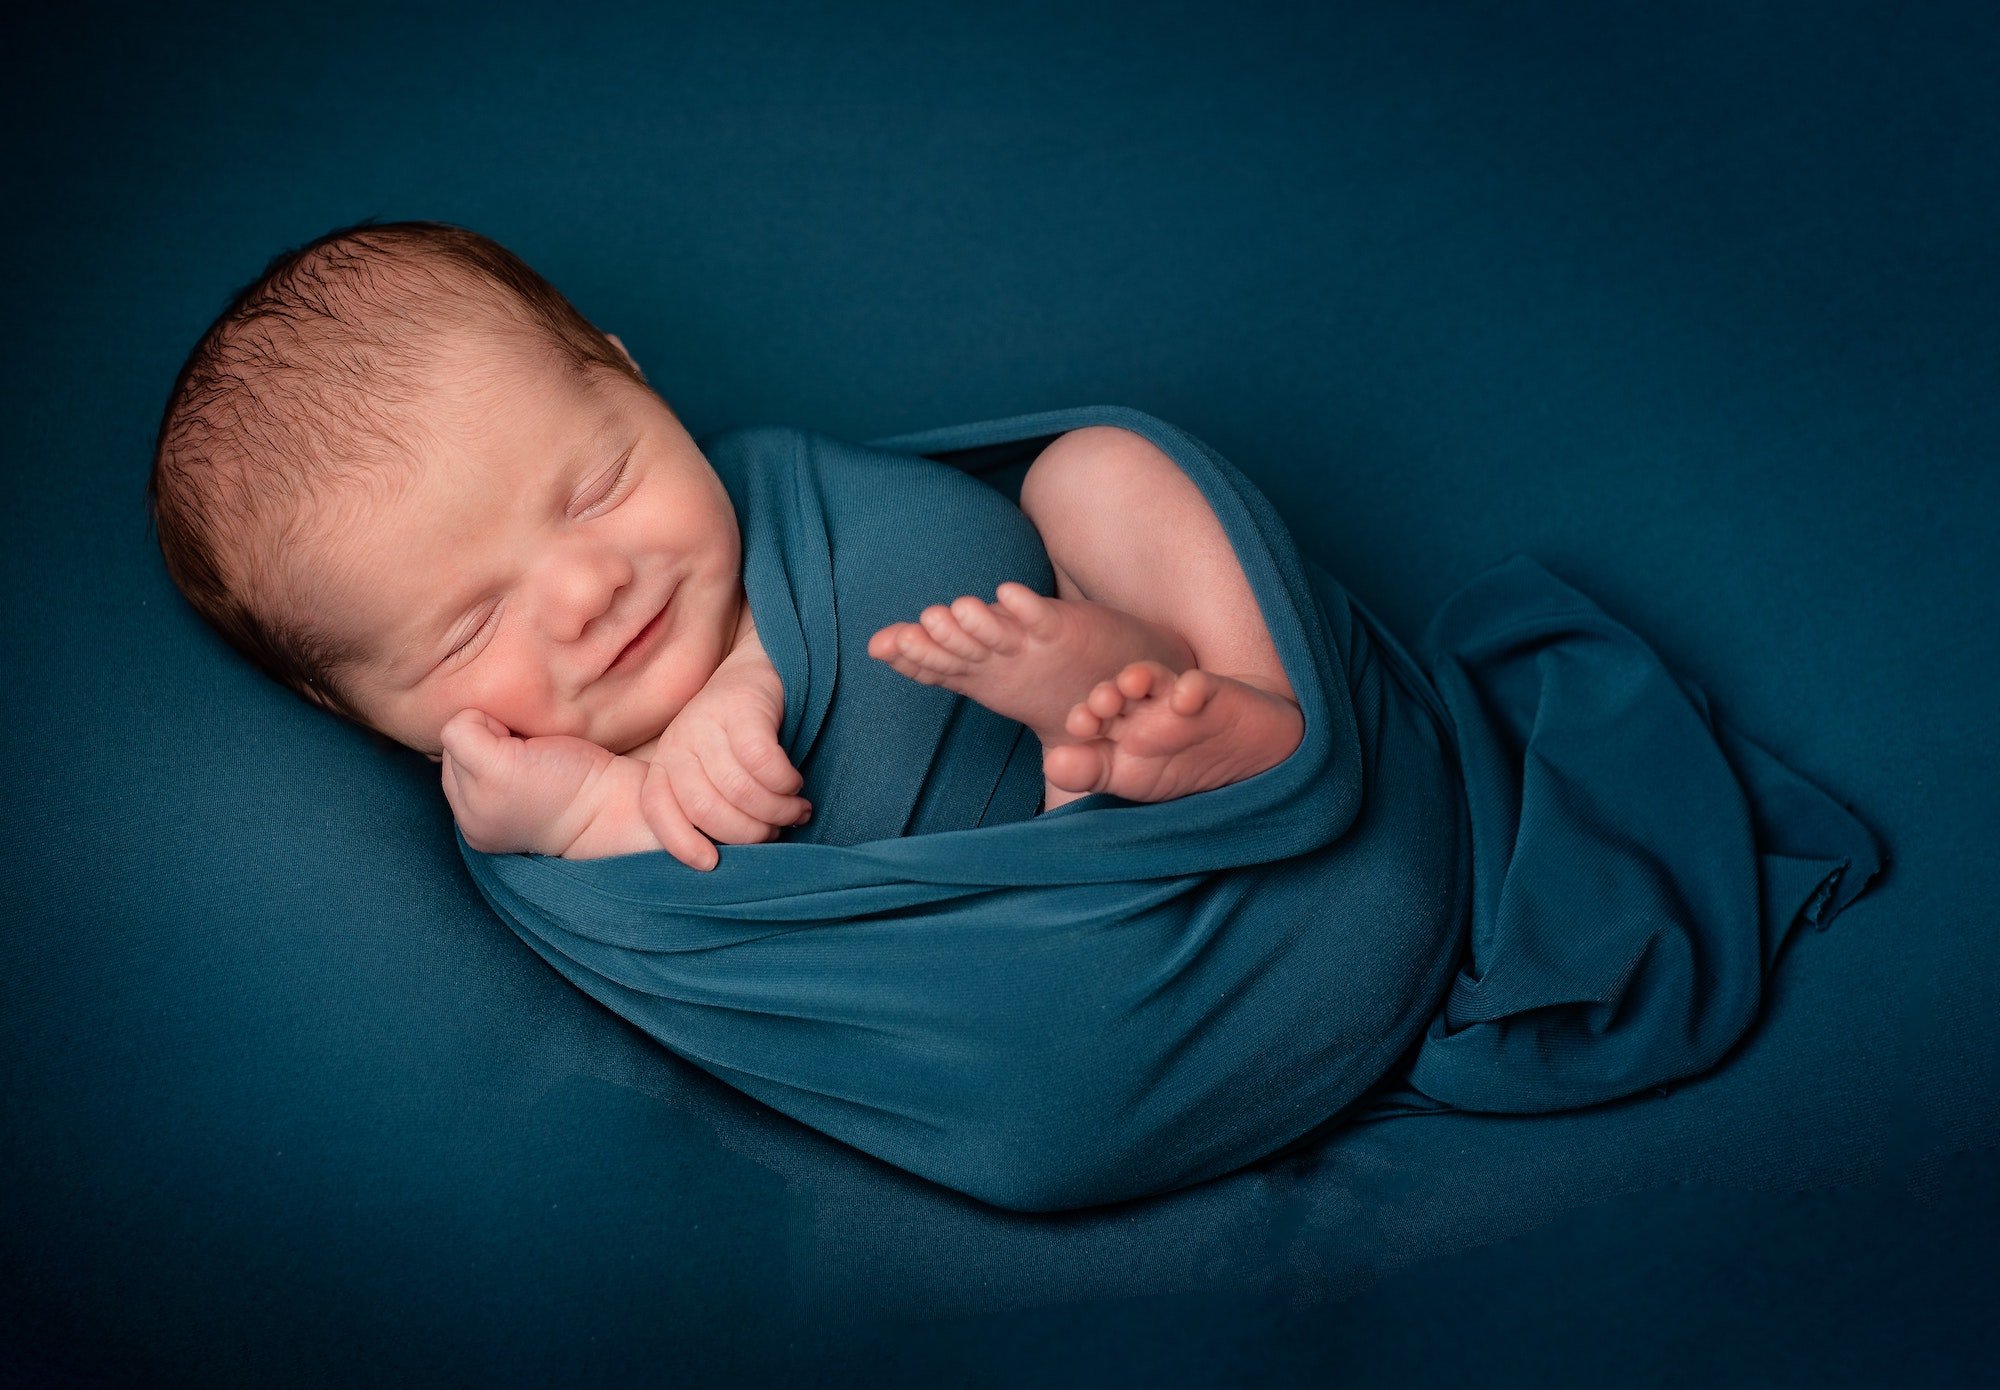 starting sleep training from birth with 1-6 week old sleep optimization tips | The Peaceful Sleeper